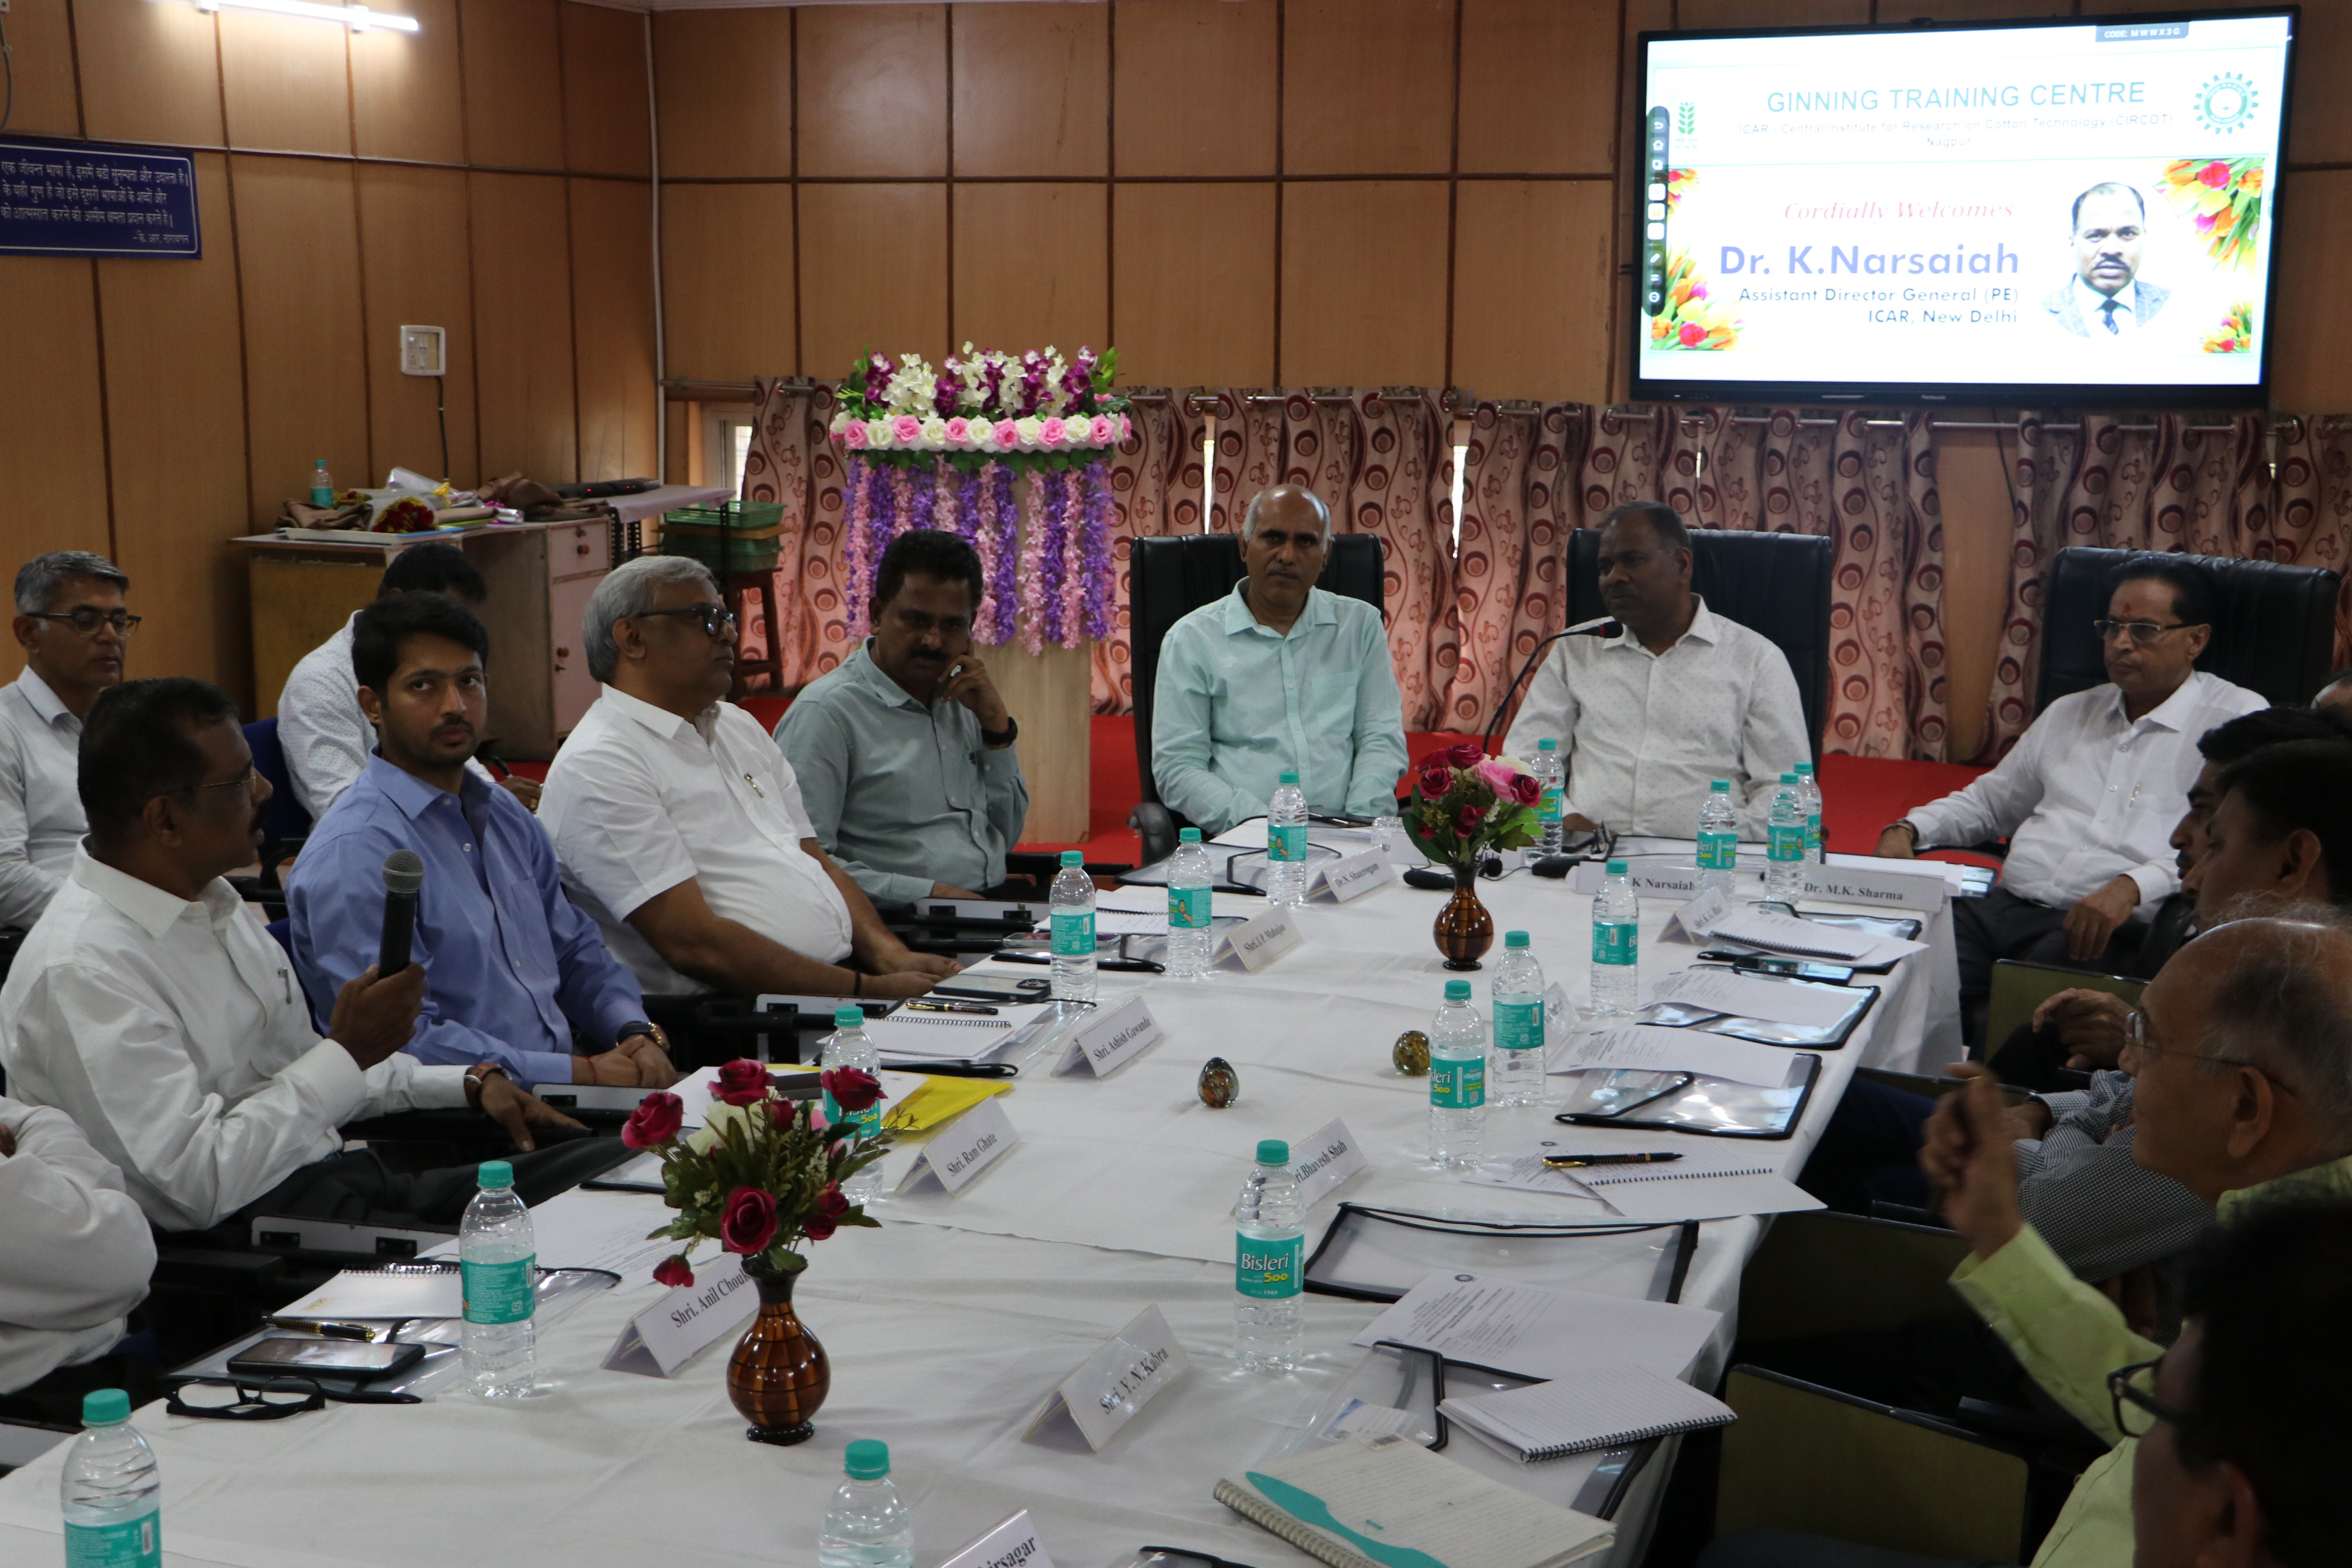 Image4 of Dr. K. Narsaiah, Assistant Director General, ICAR, New Delhi visits Ginning Training Centre, ICAR-CIRCOT, Nagpur